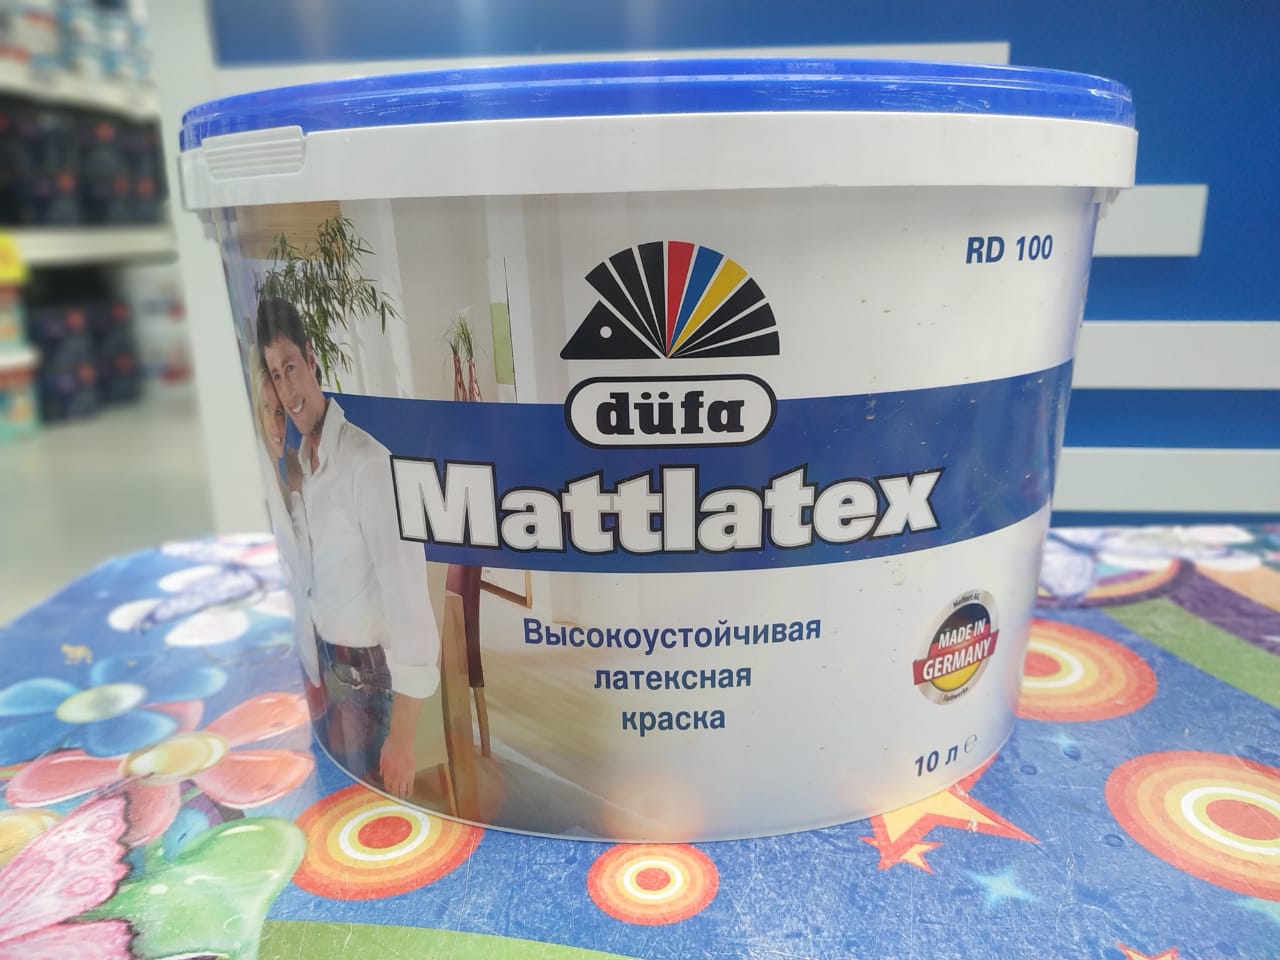 Mattlatex Dufa -       